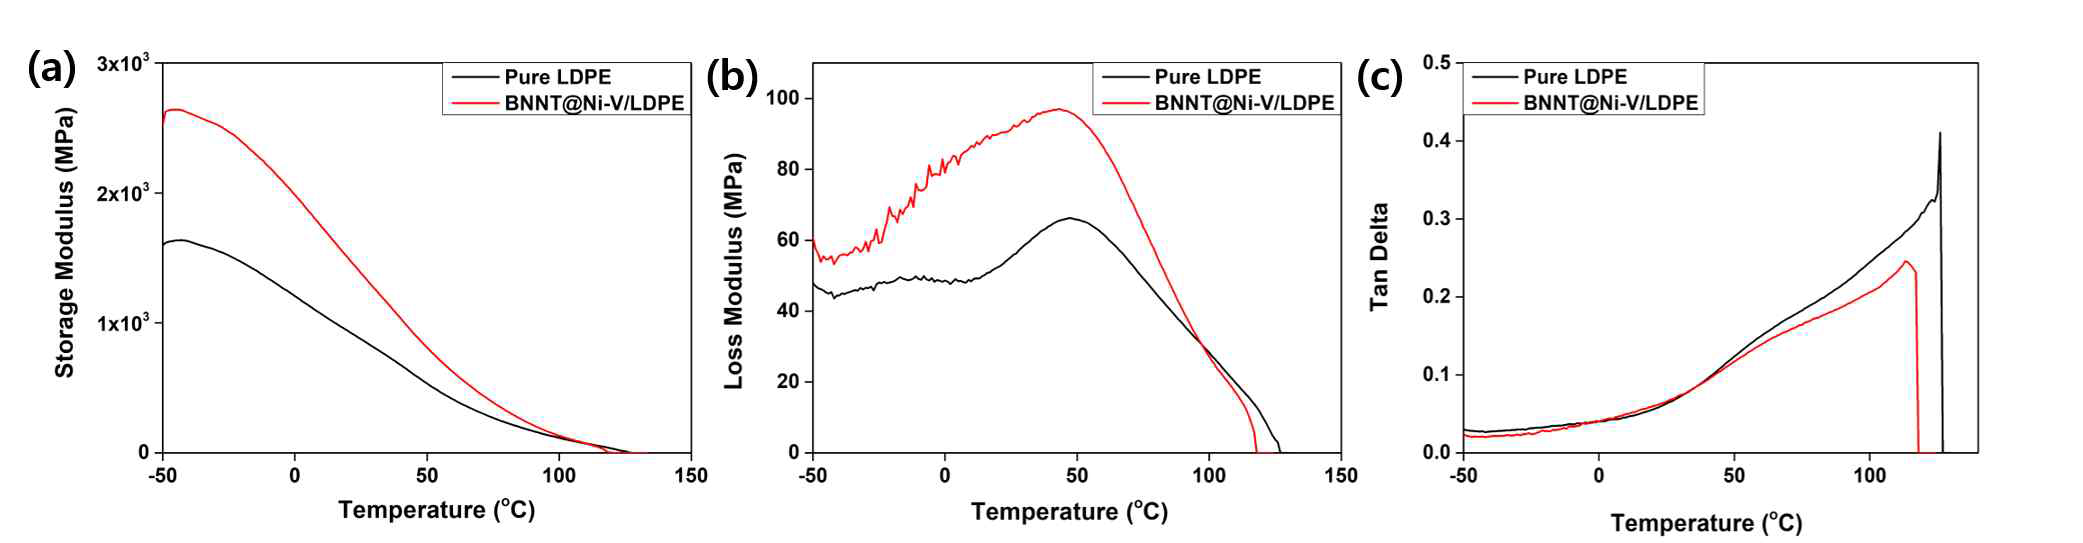 Pure LDPE 나노섬유매트 및 BNNT@Ni-V/LDPE복합나노섬유 매트의 DMA 결과: (a) Storage modulus, (b) Loss modulus, (c) Tan δ